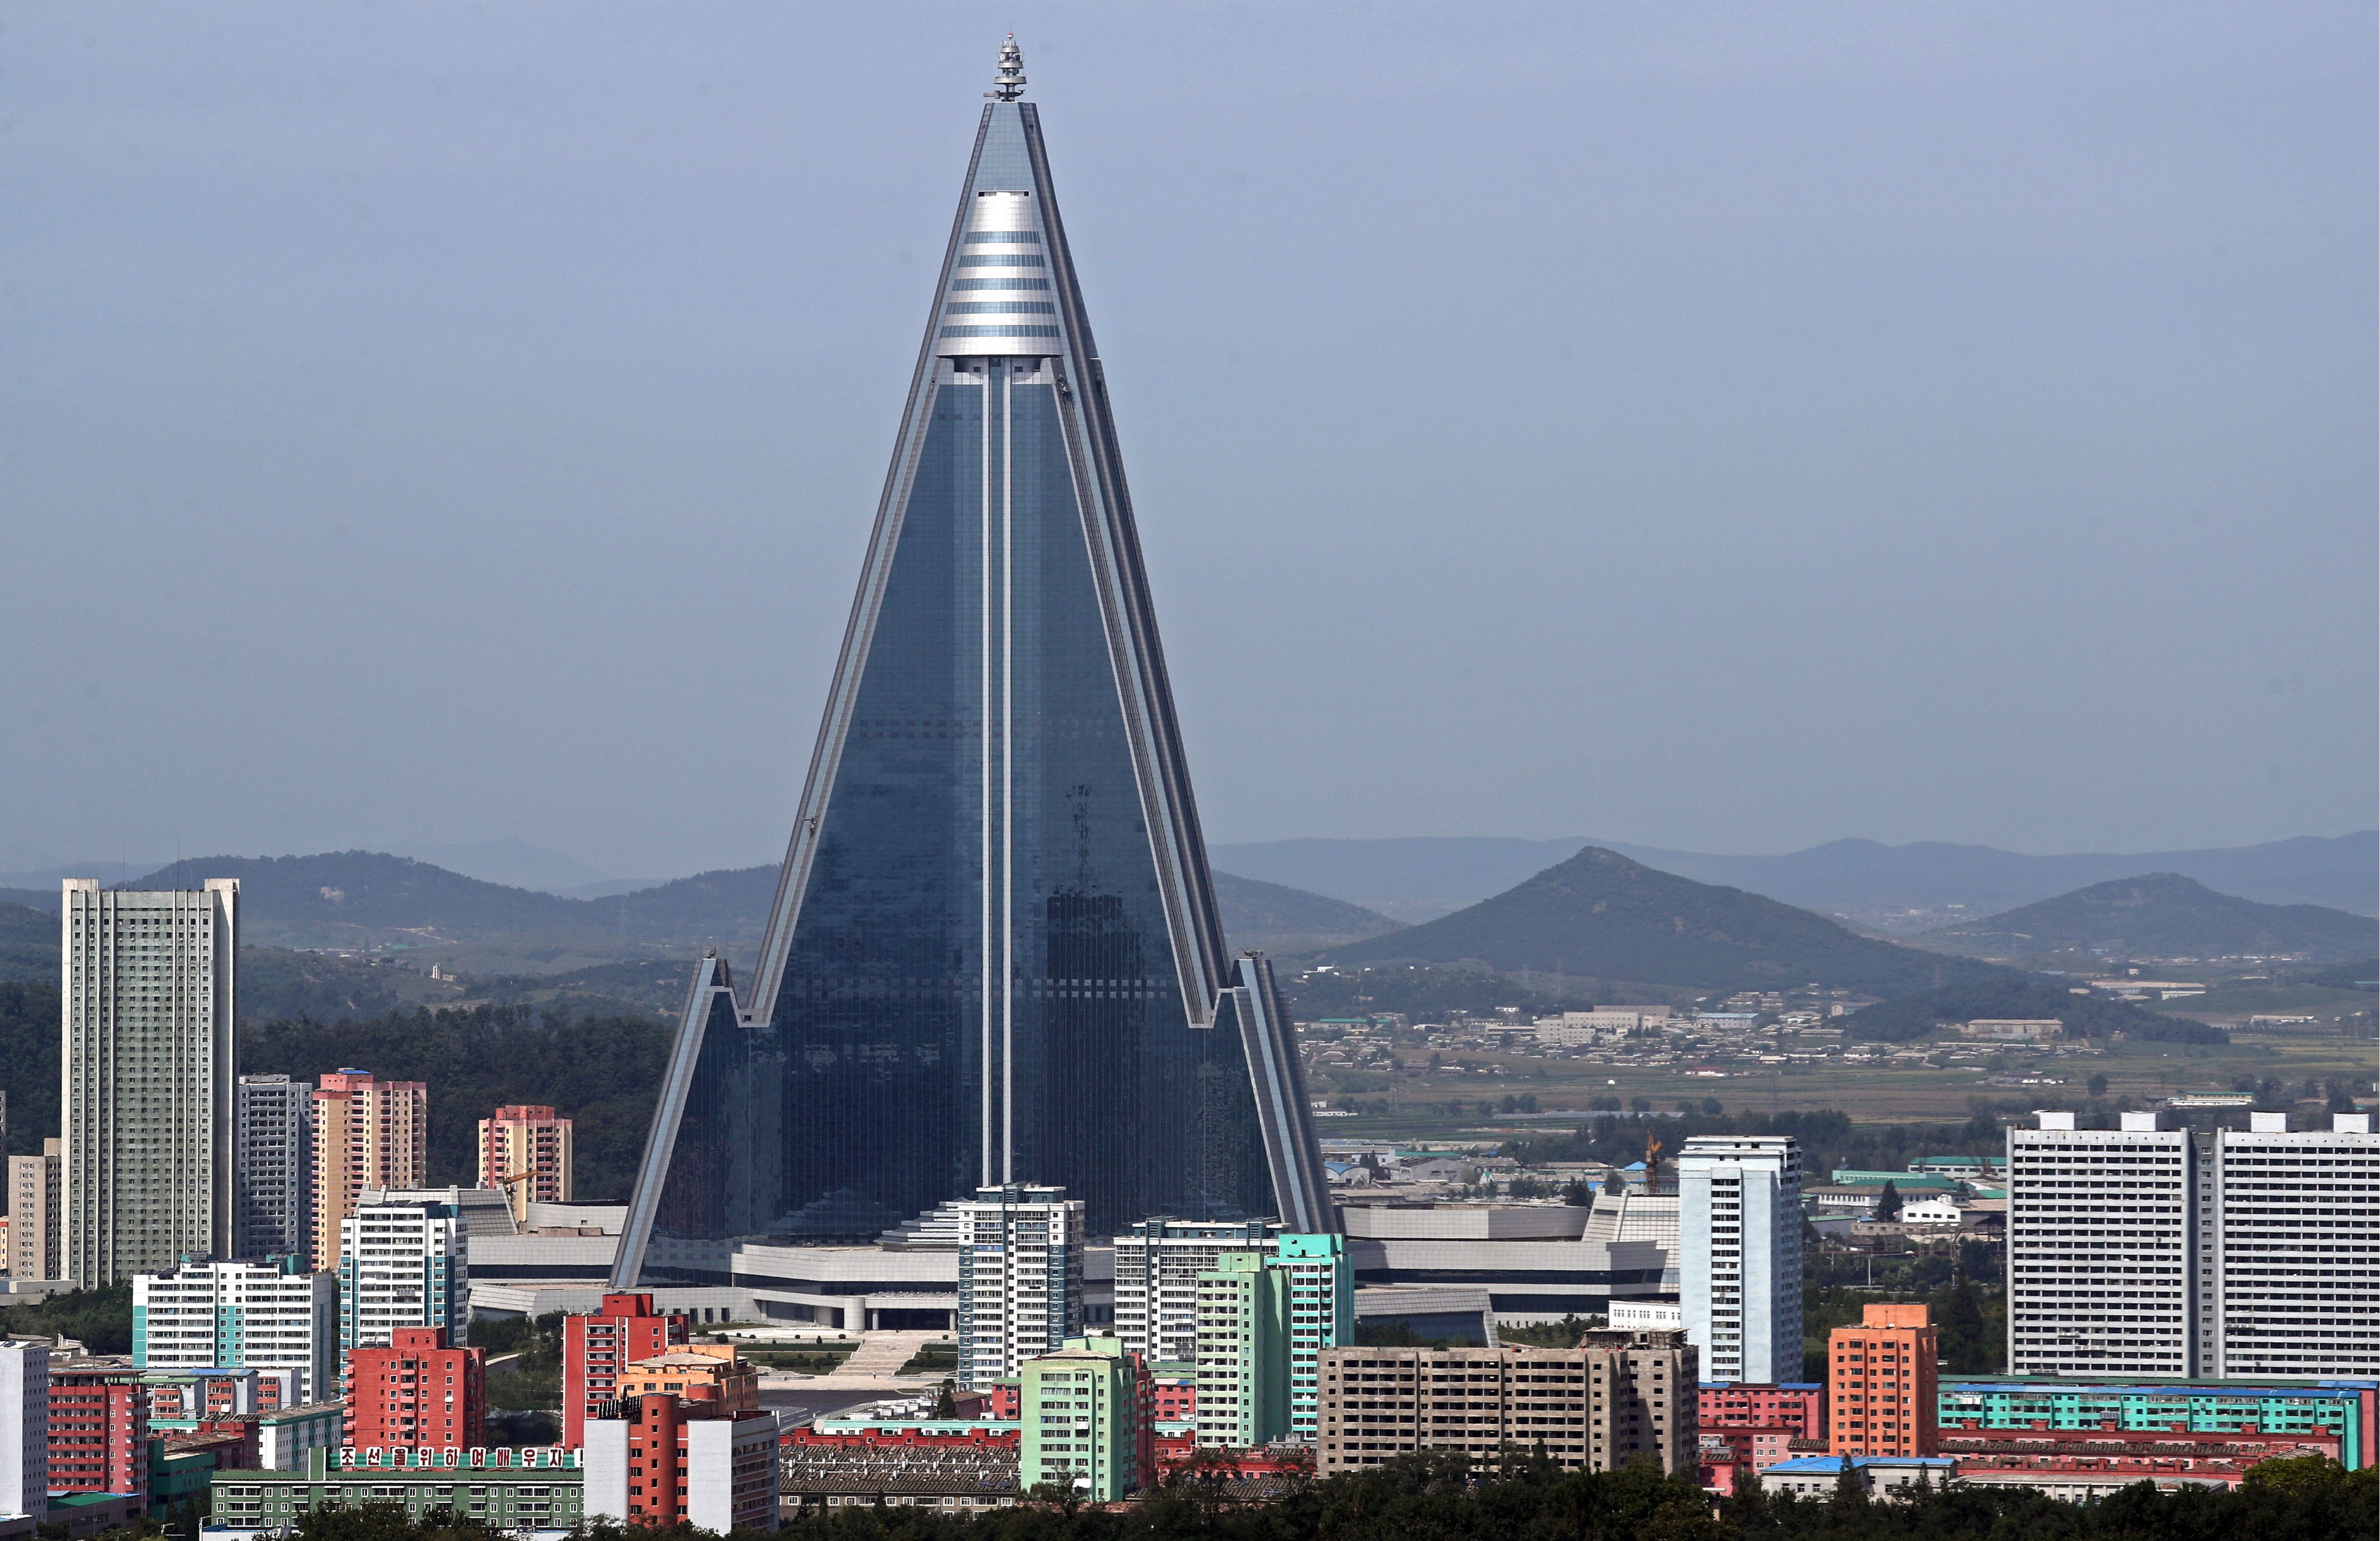 Ryugyong Hotel: The story of North Korea's 'Hotel of Doom